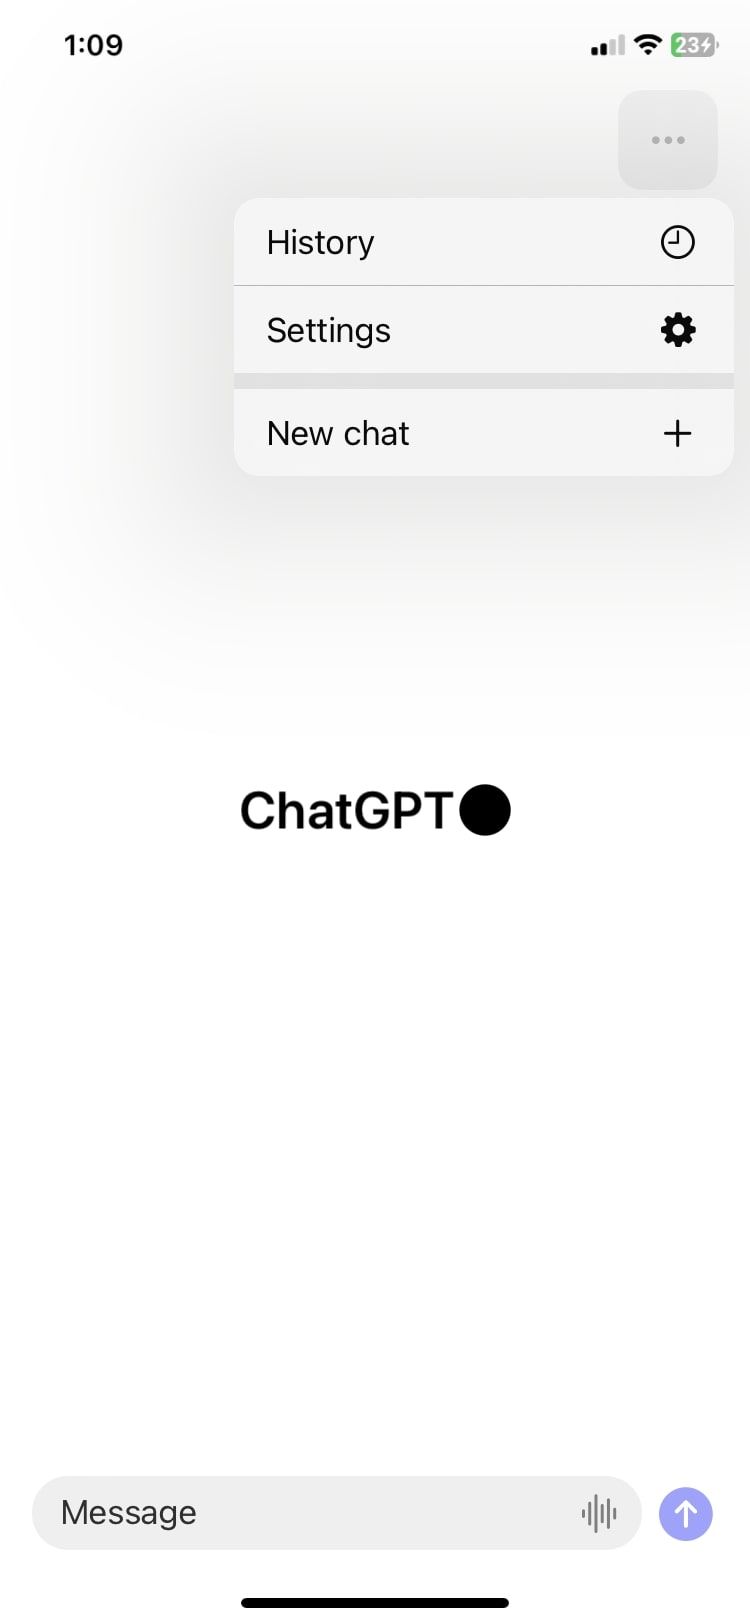 chatGPT menu on iOS app